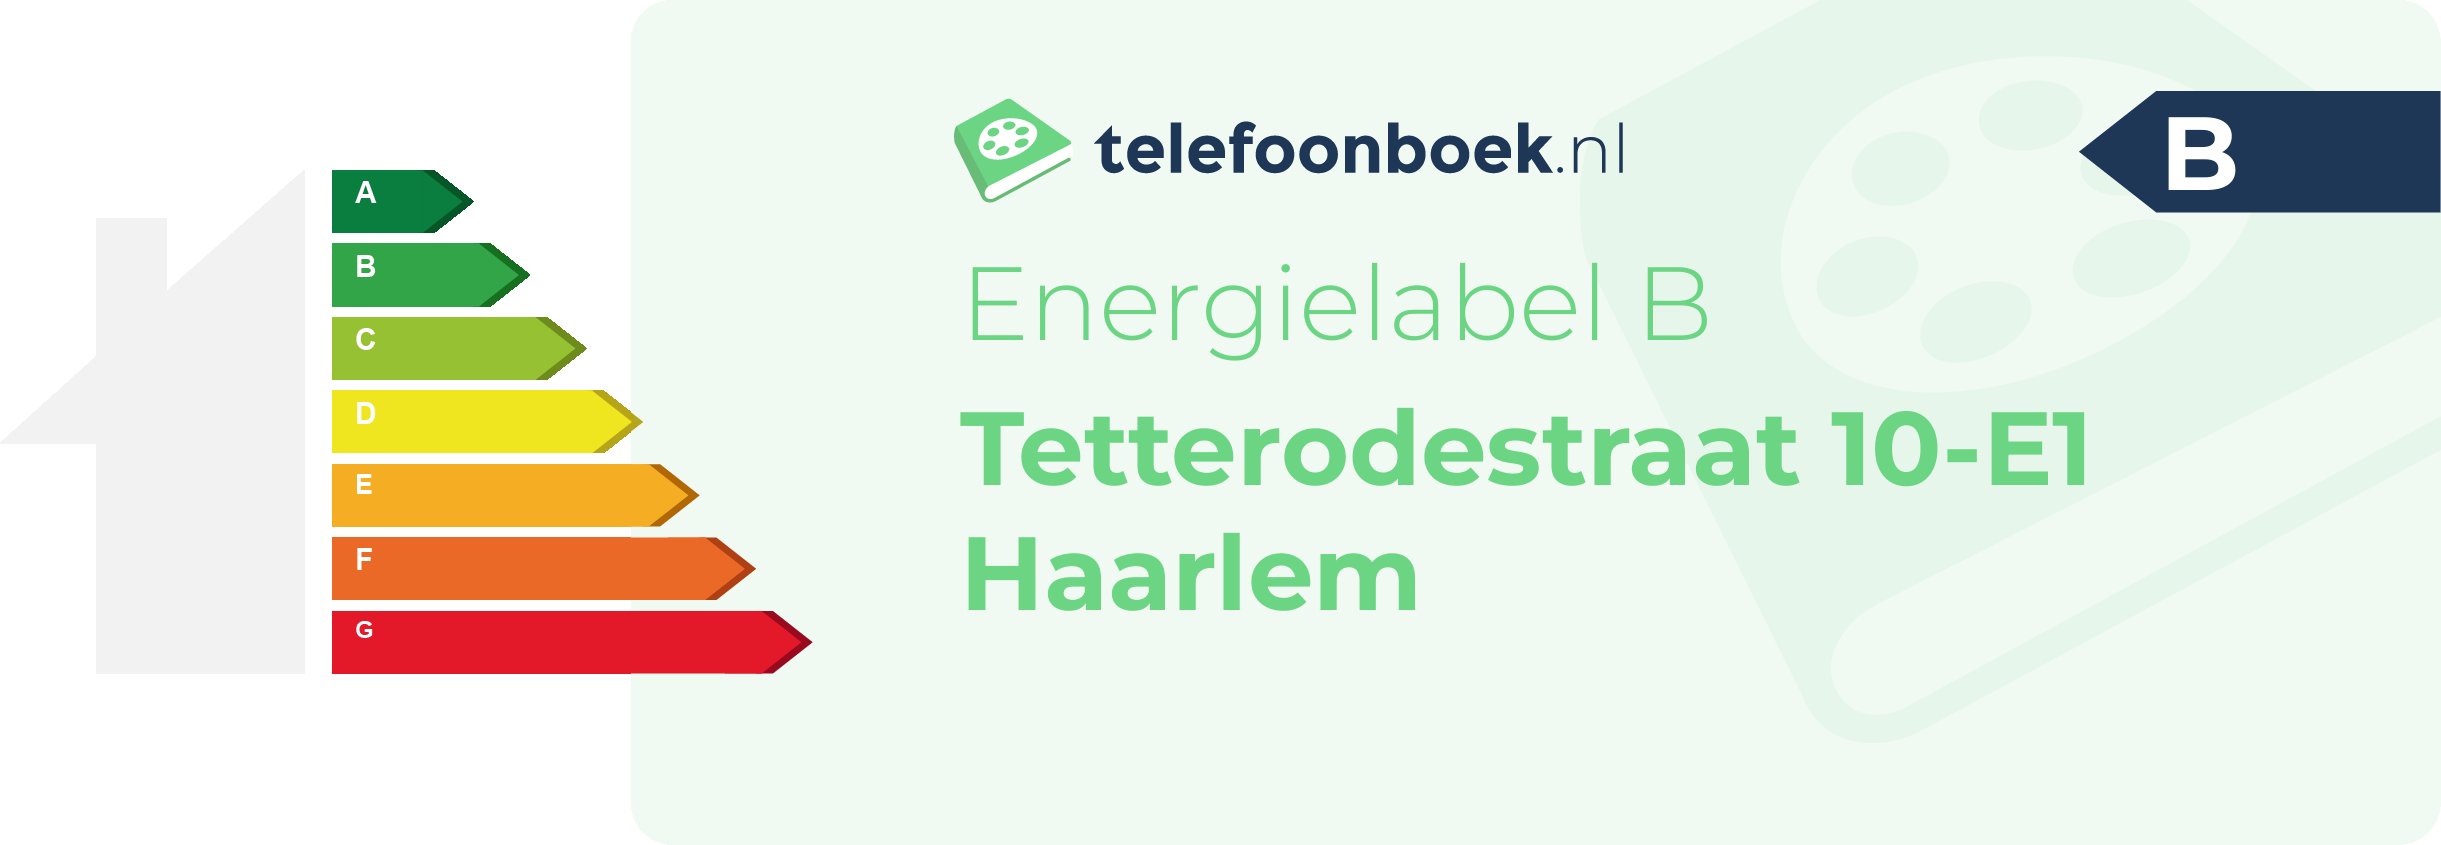 Energielabel Tetterodestraat 10-E1 Haarlem